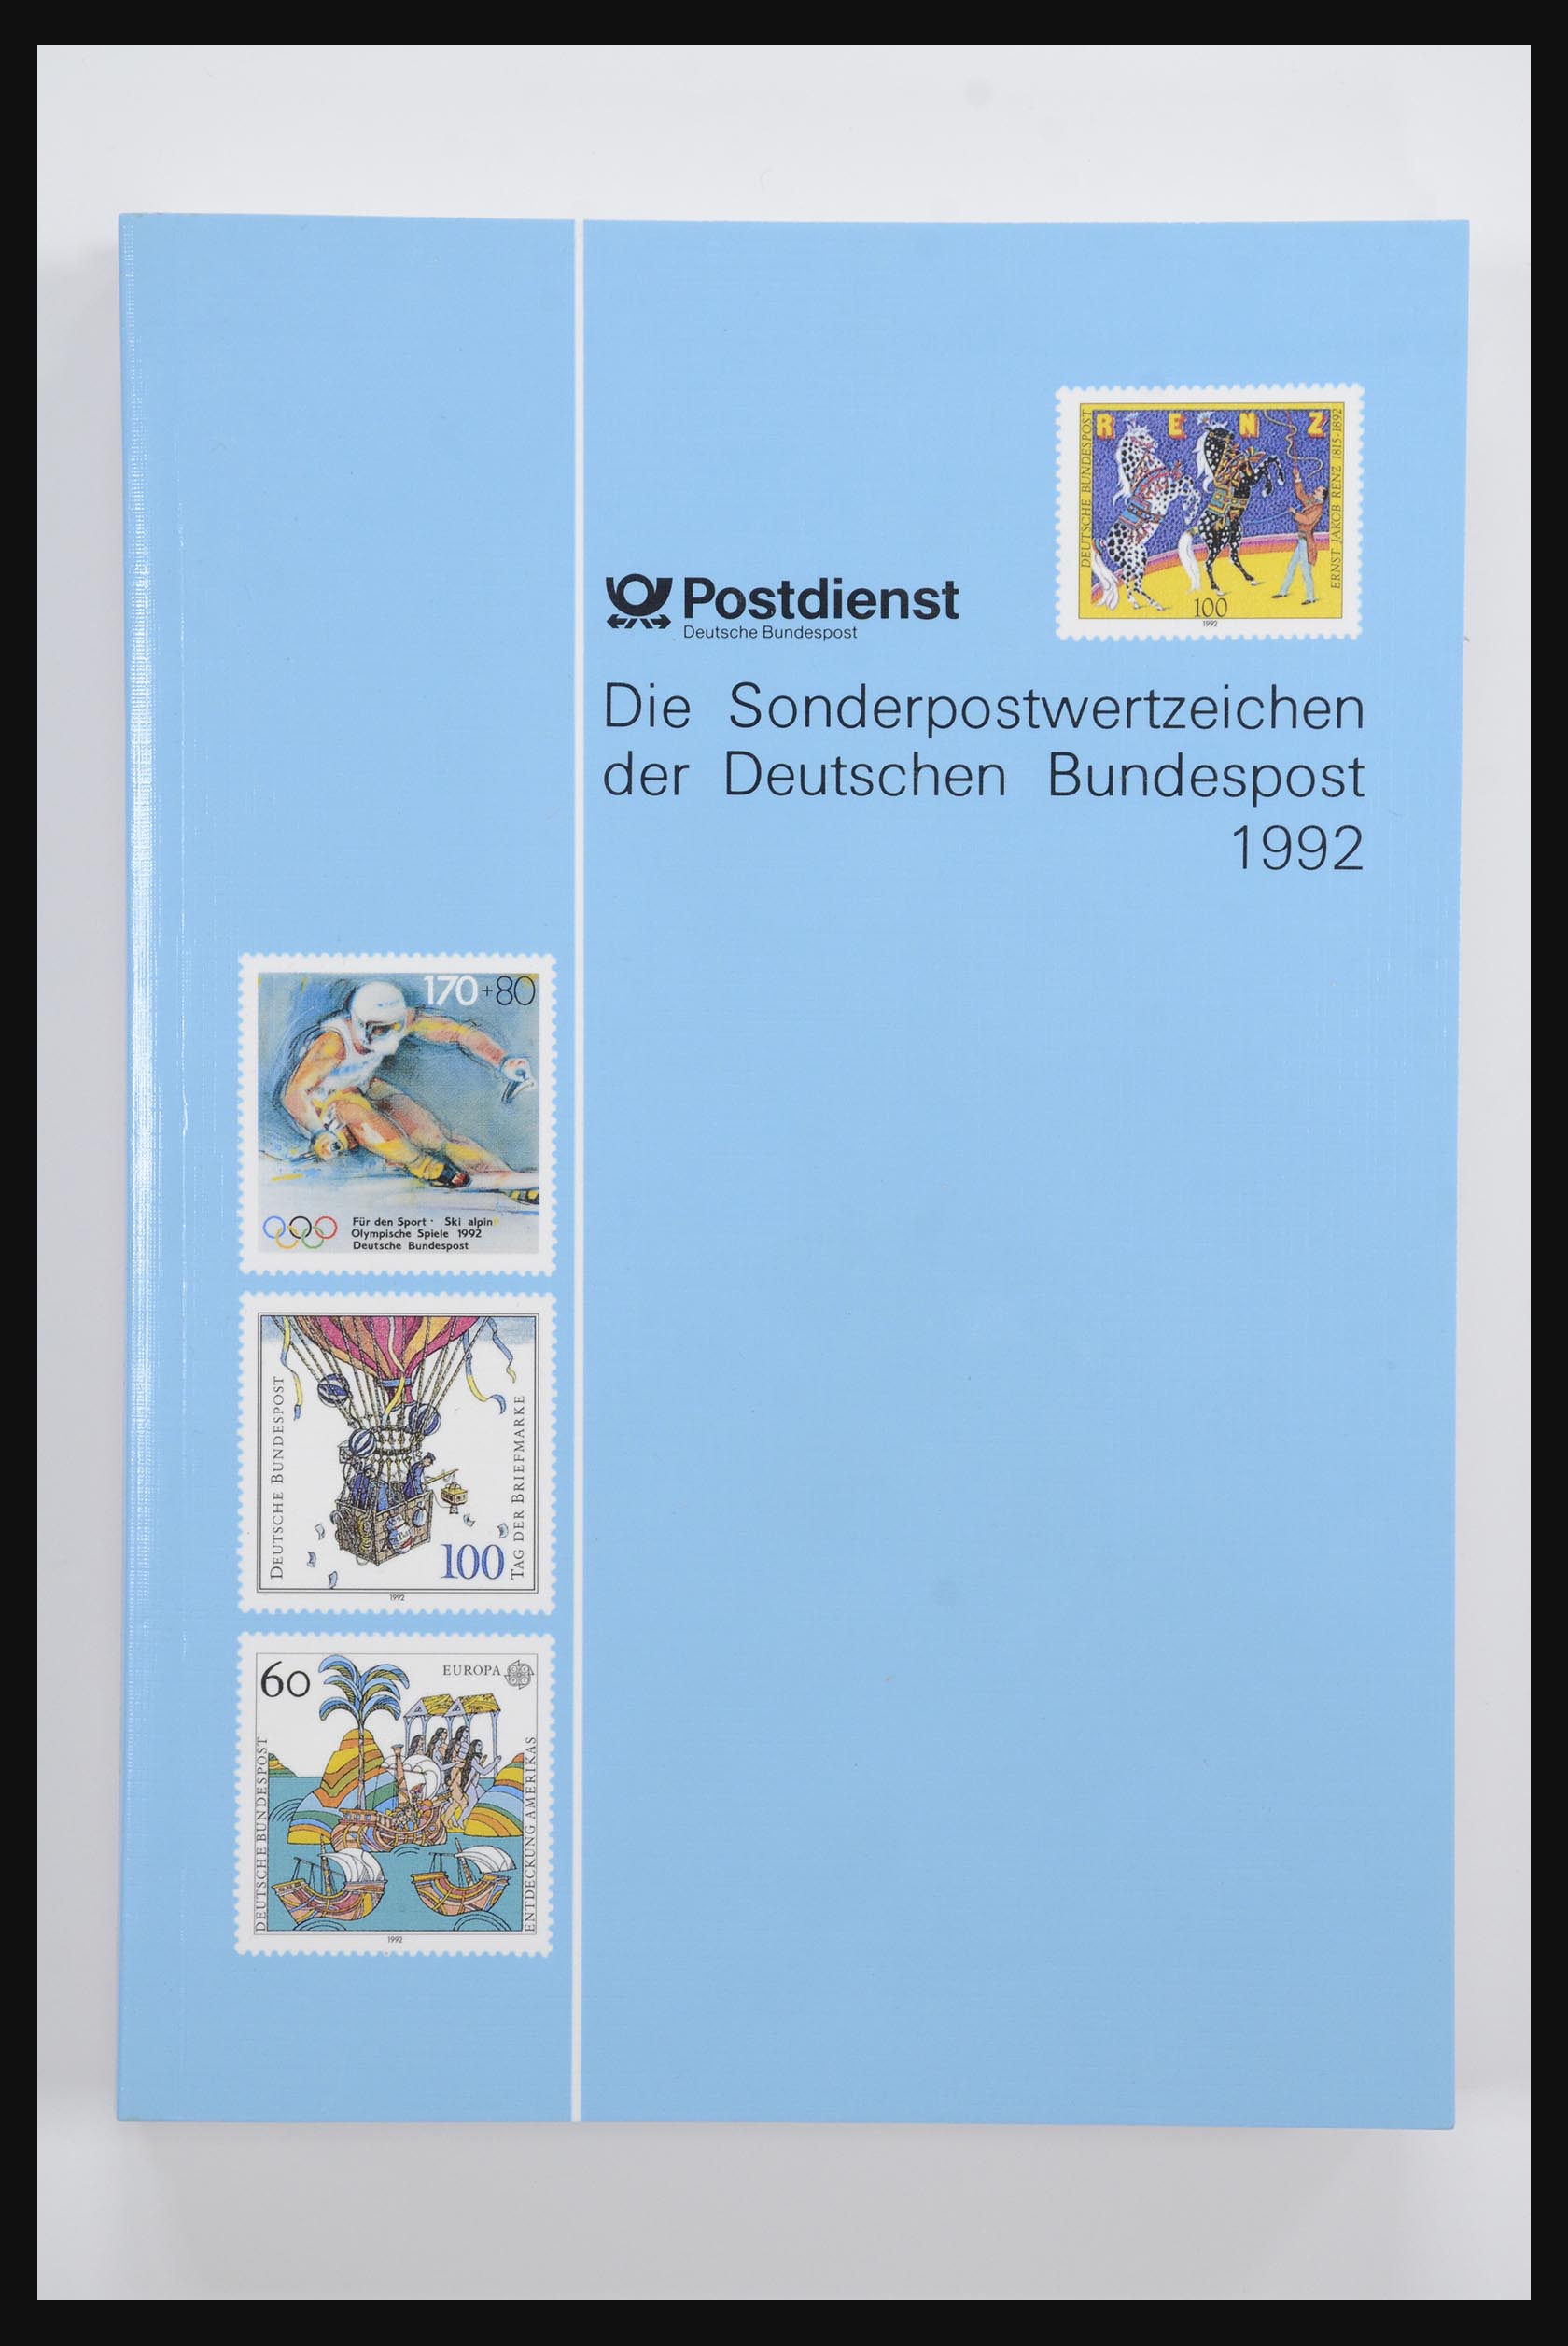 31836 019 - 31836 Bundespost yearbooks 1974-1999.